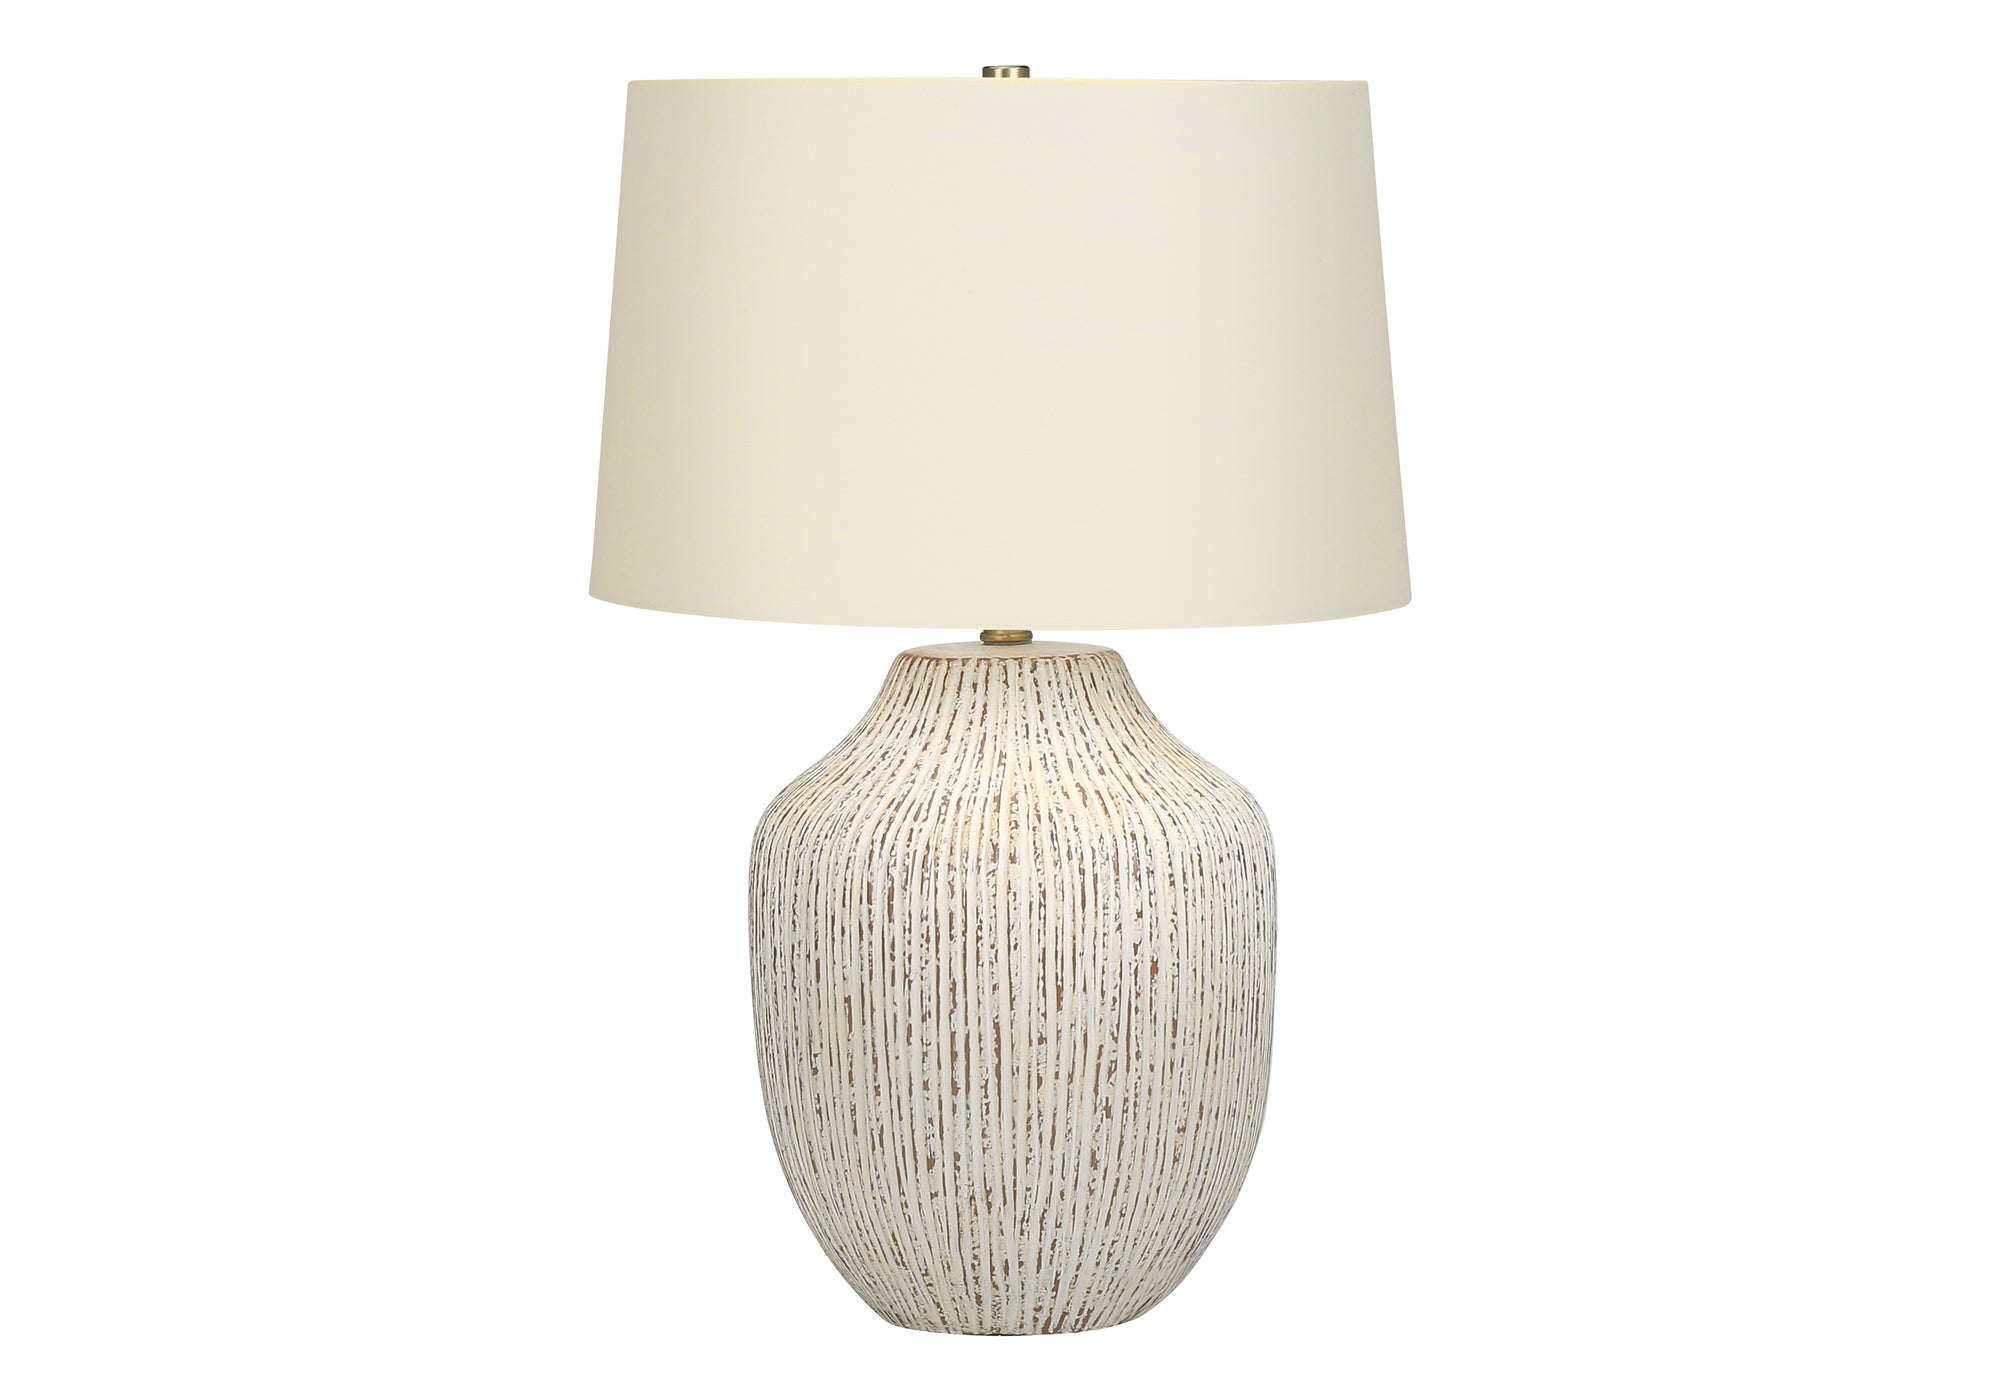 MN-539719    Lighting, 26"H, Table Lamp, Cream Ceramic, Ivory / Cream Shade, Transitional